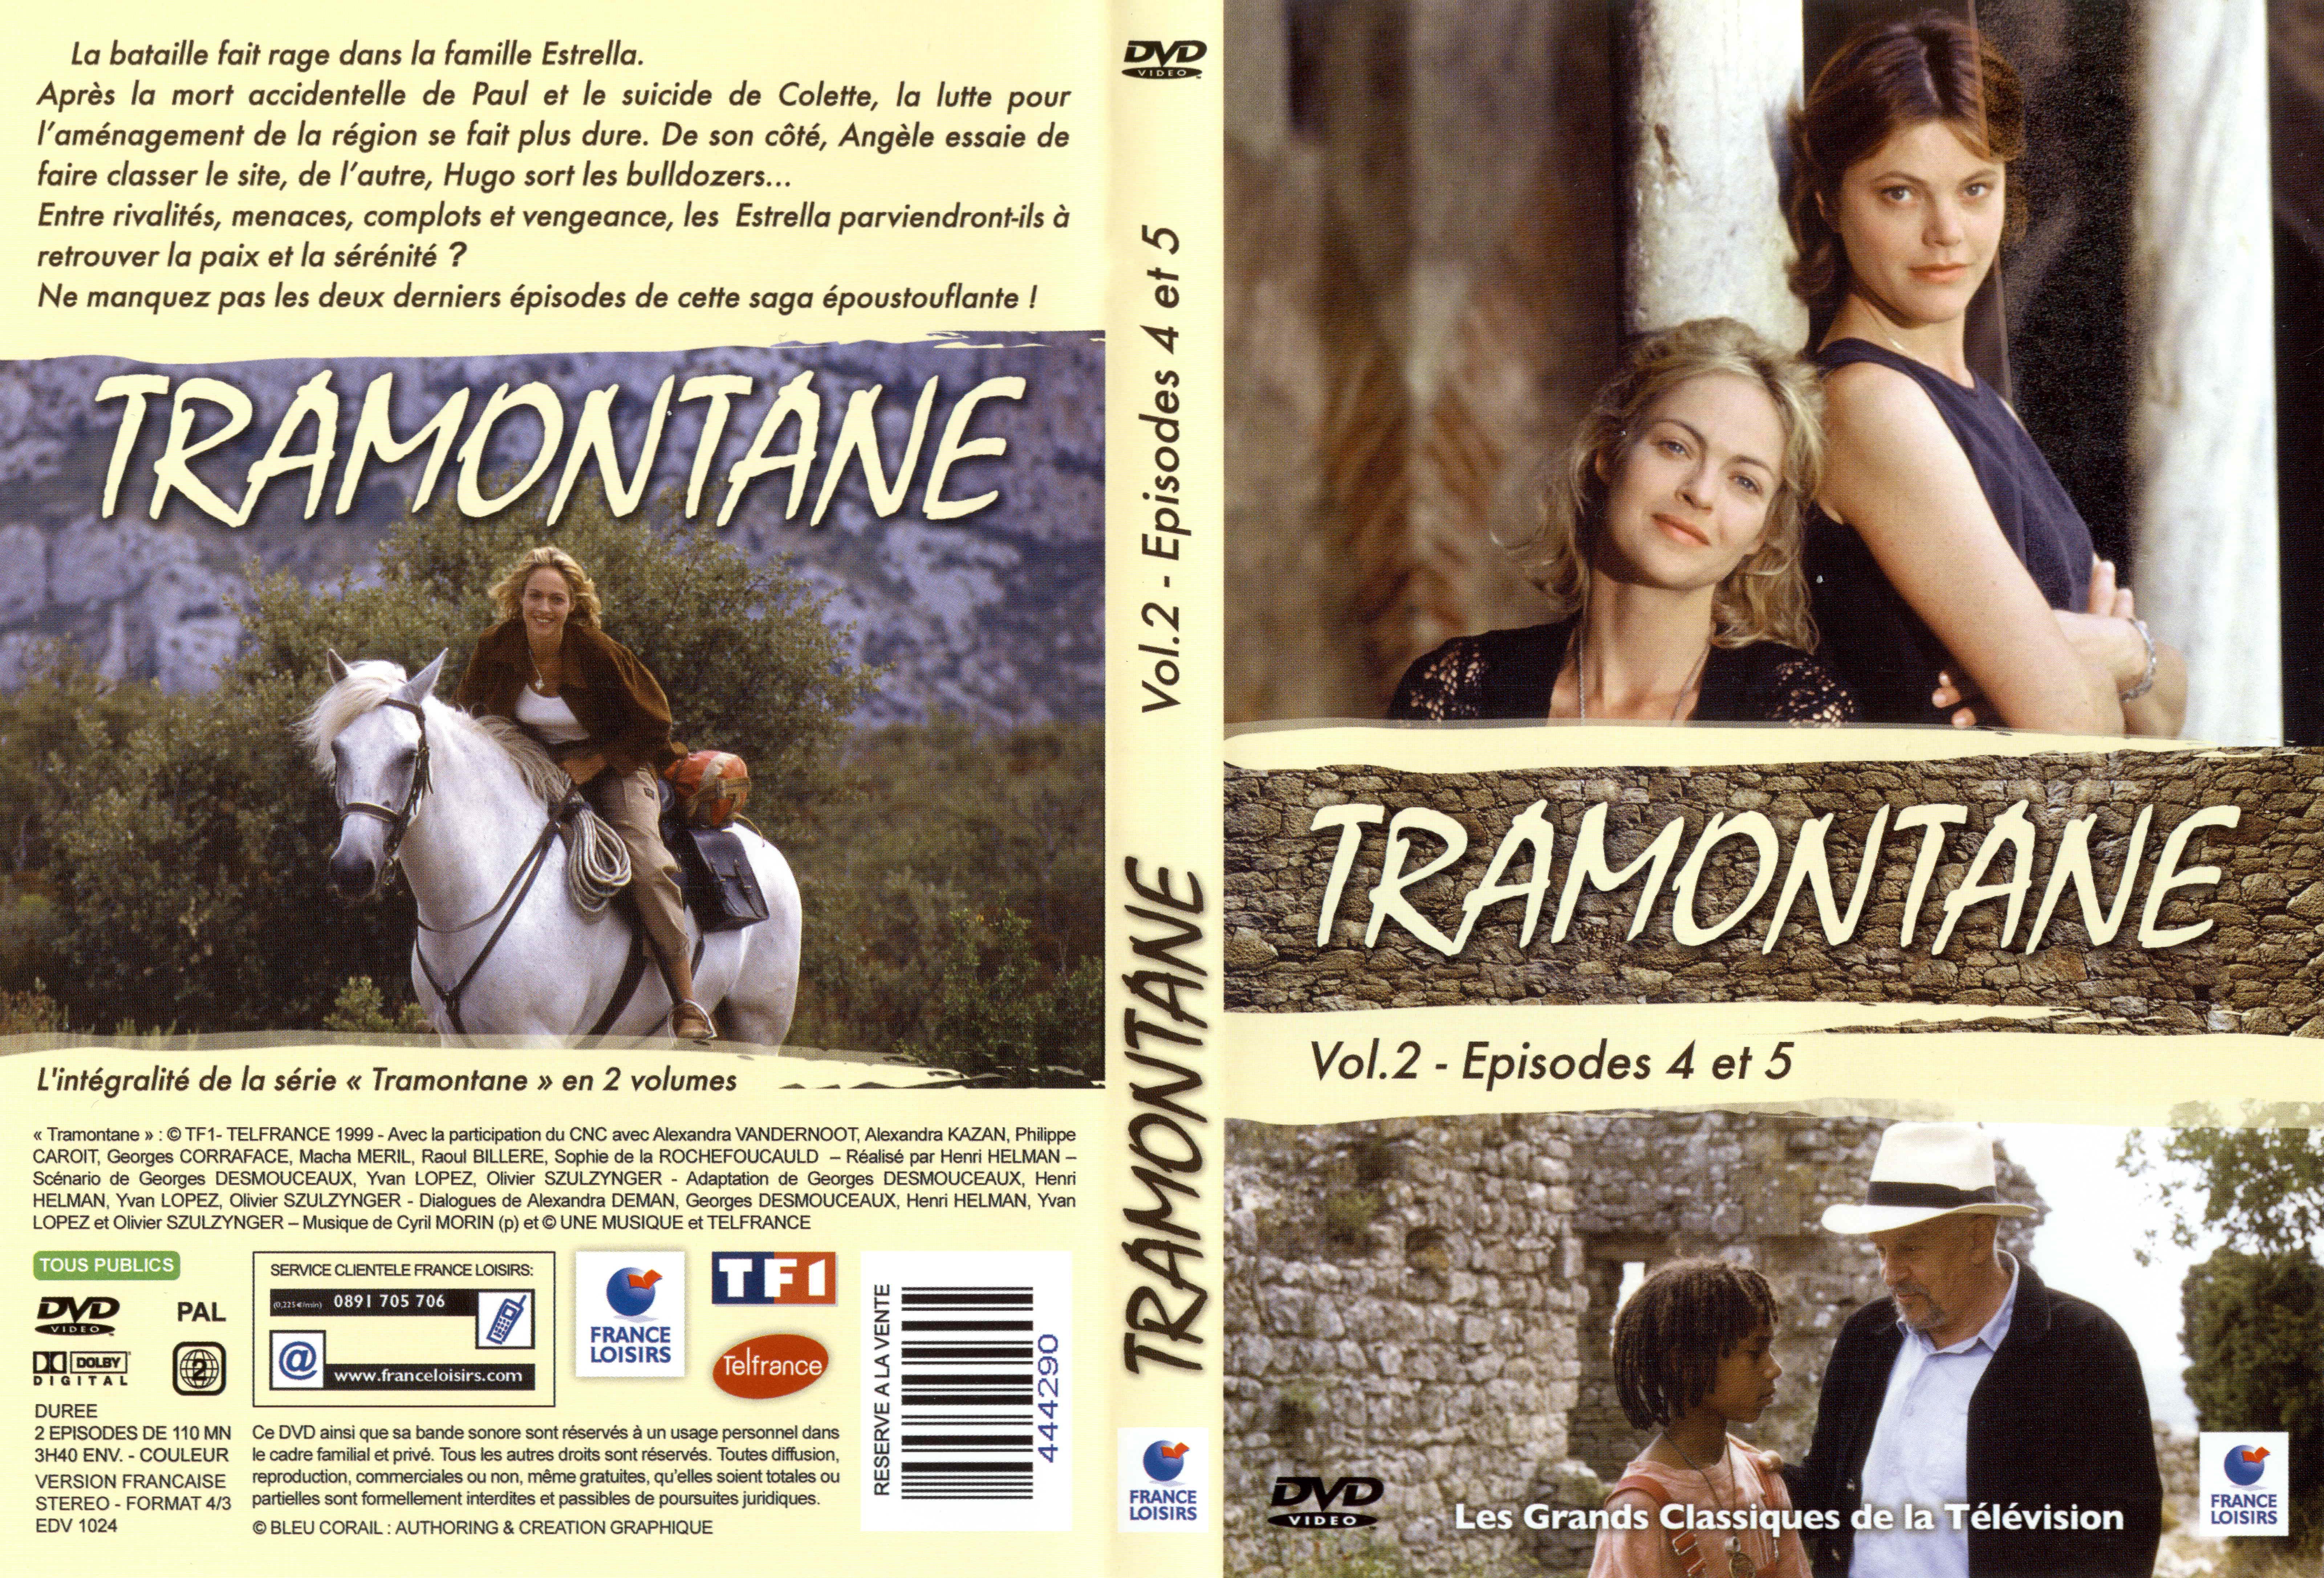 Jaquette DVD Tramontane vol 2